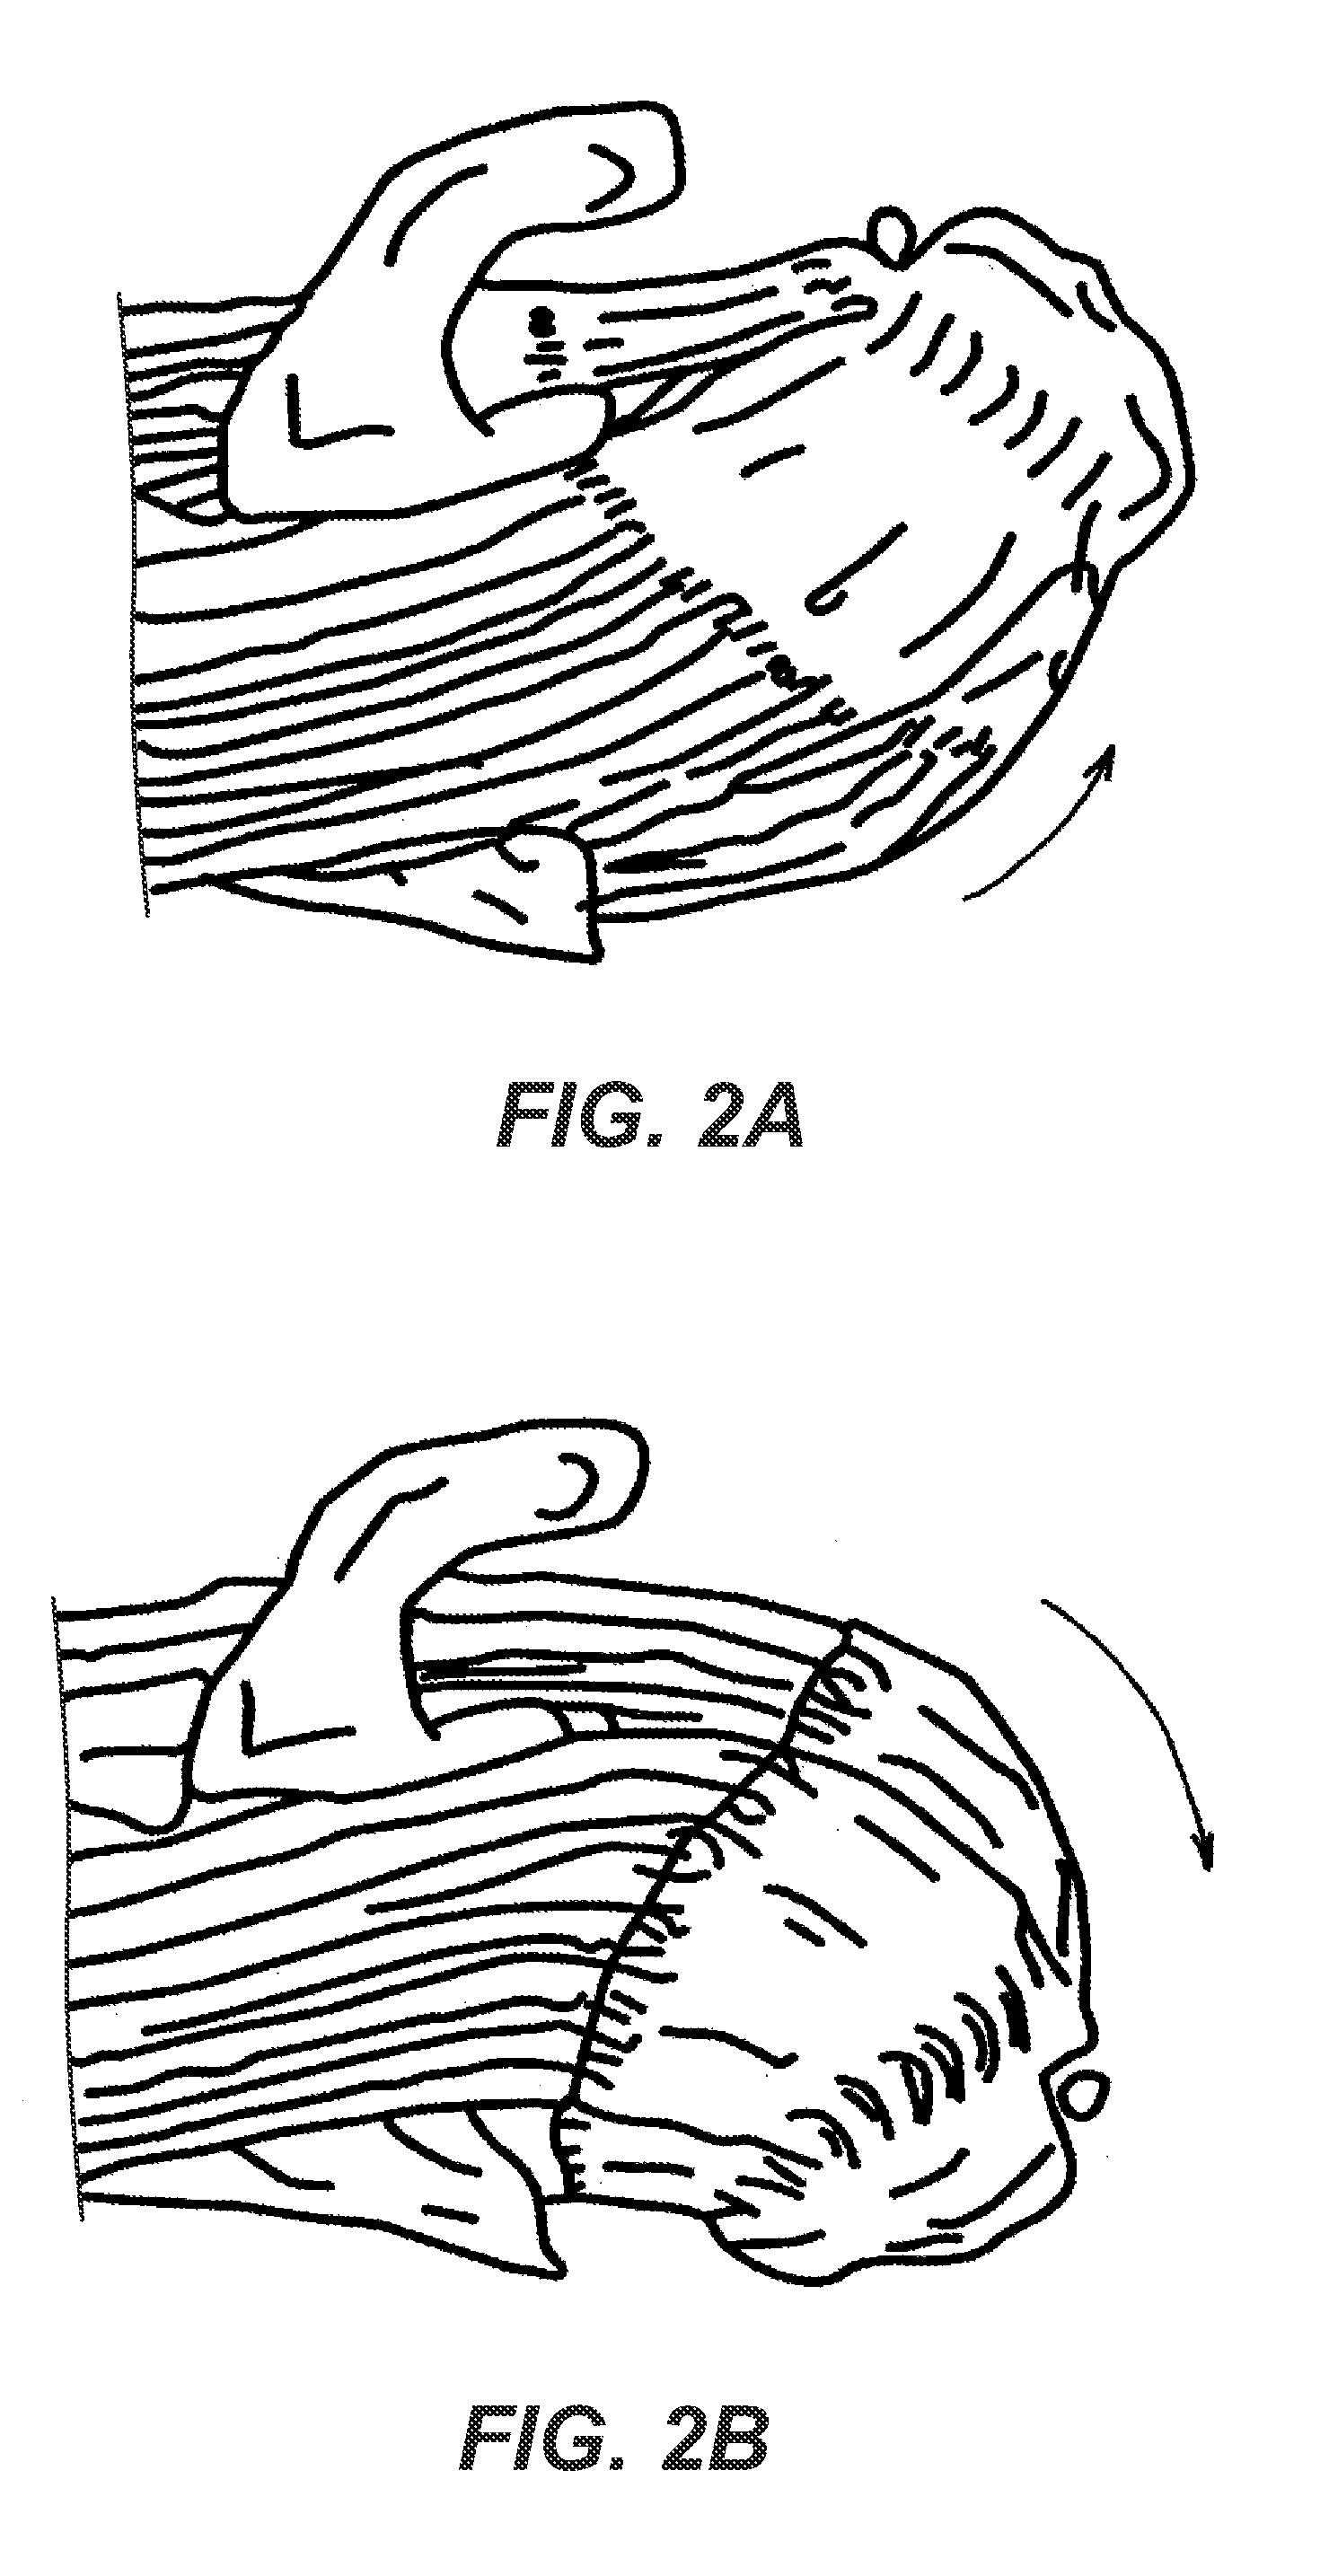 Segmentally rigid suture and suturing technique